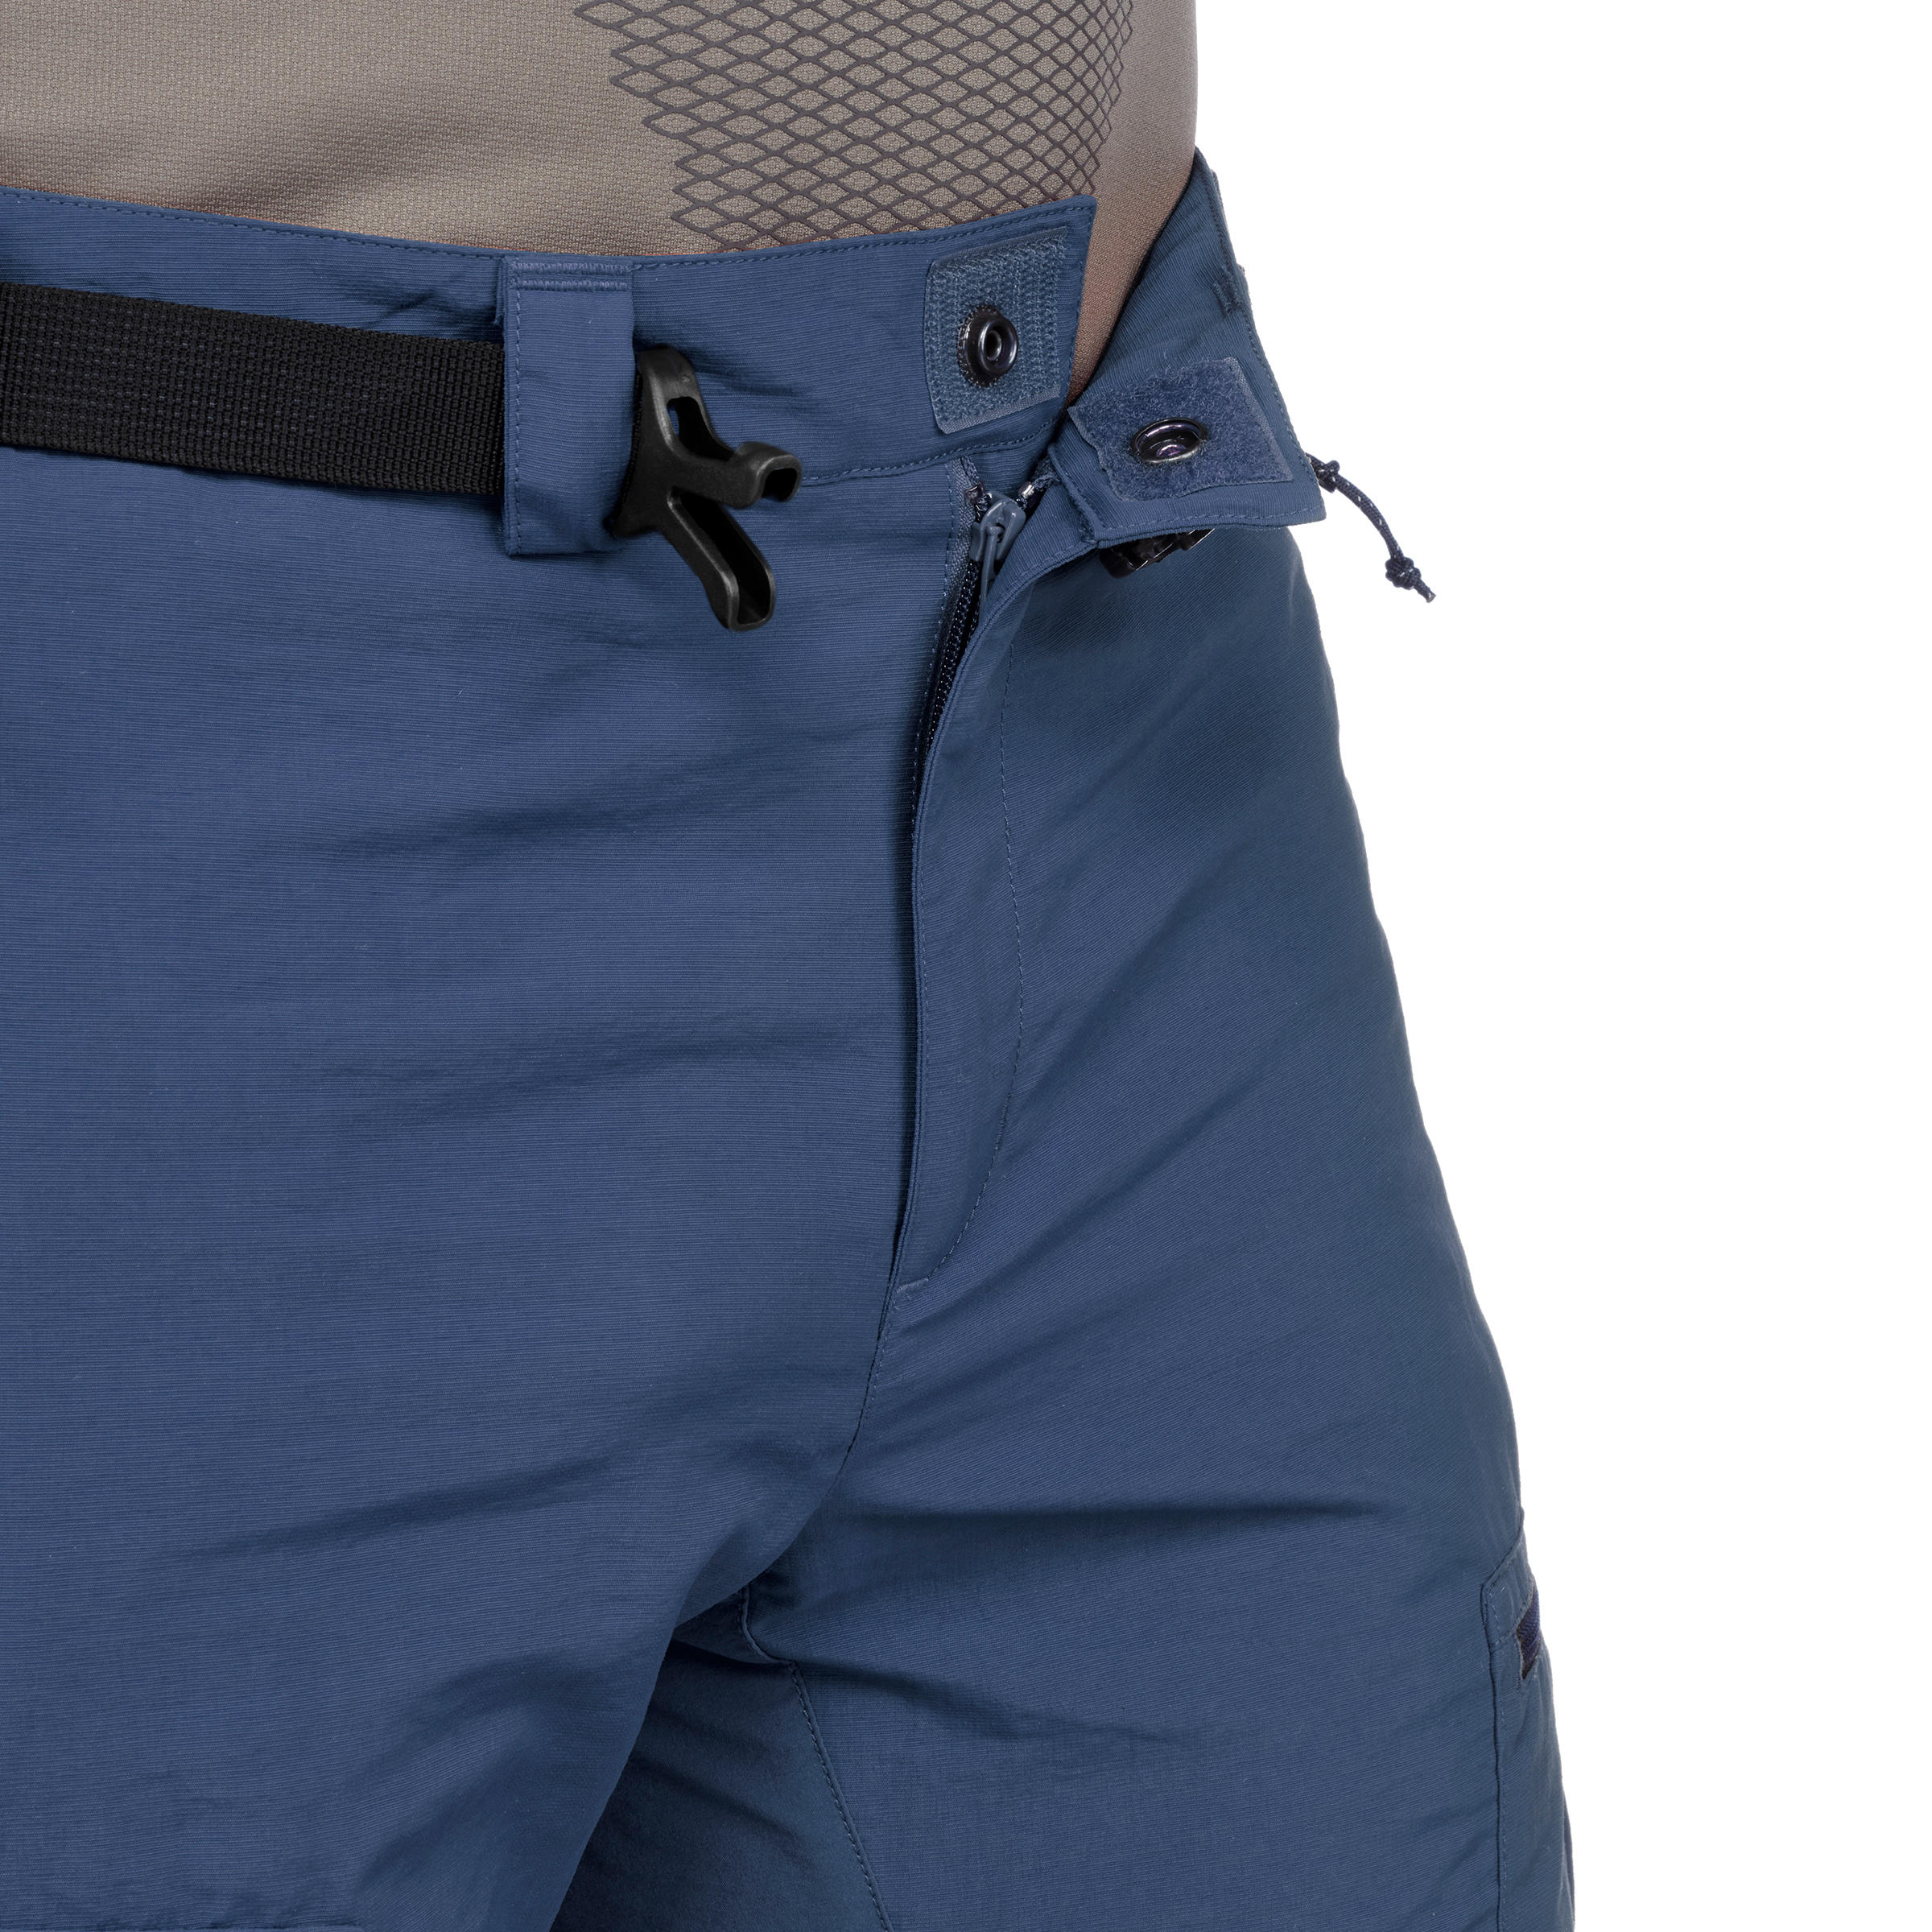 Men's Mountain Trekking Trousers -TREK 500 - Blue 7/13